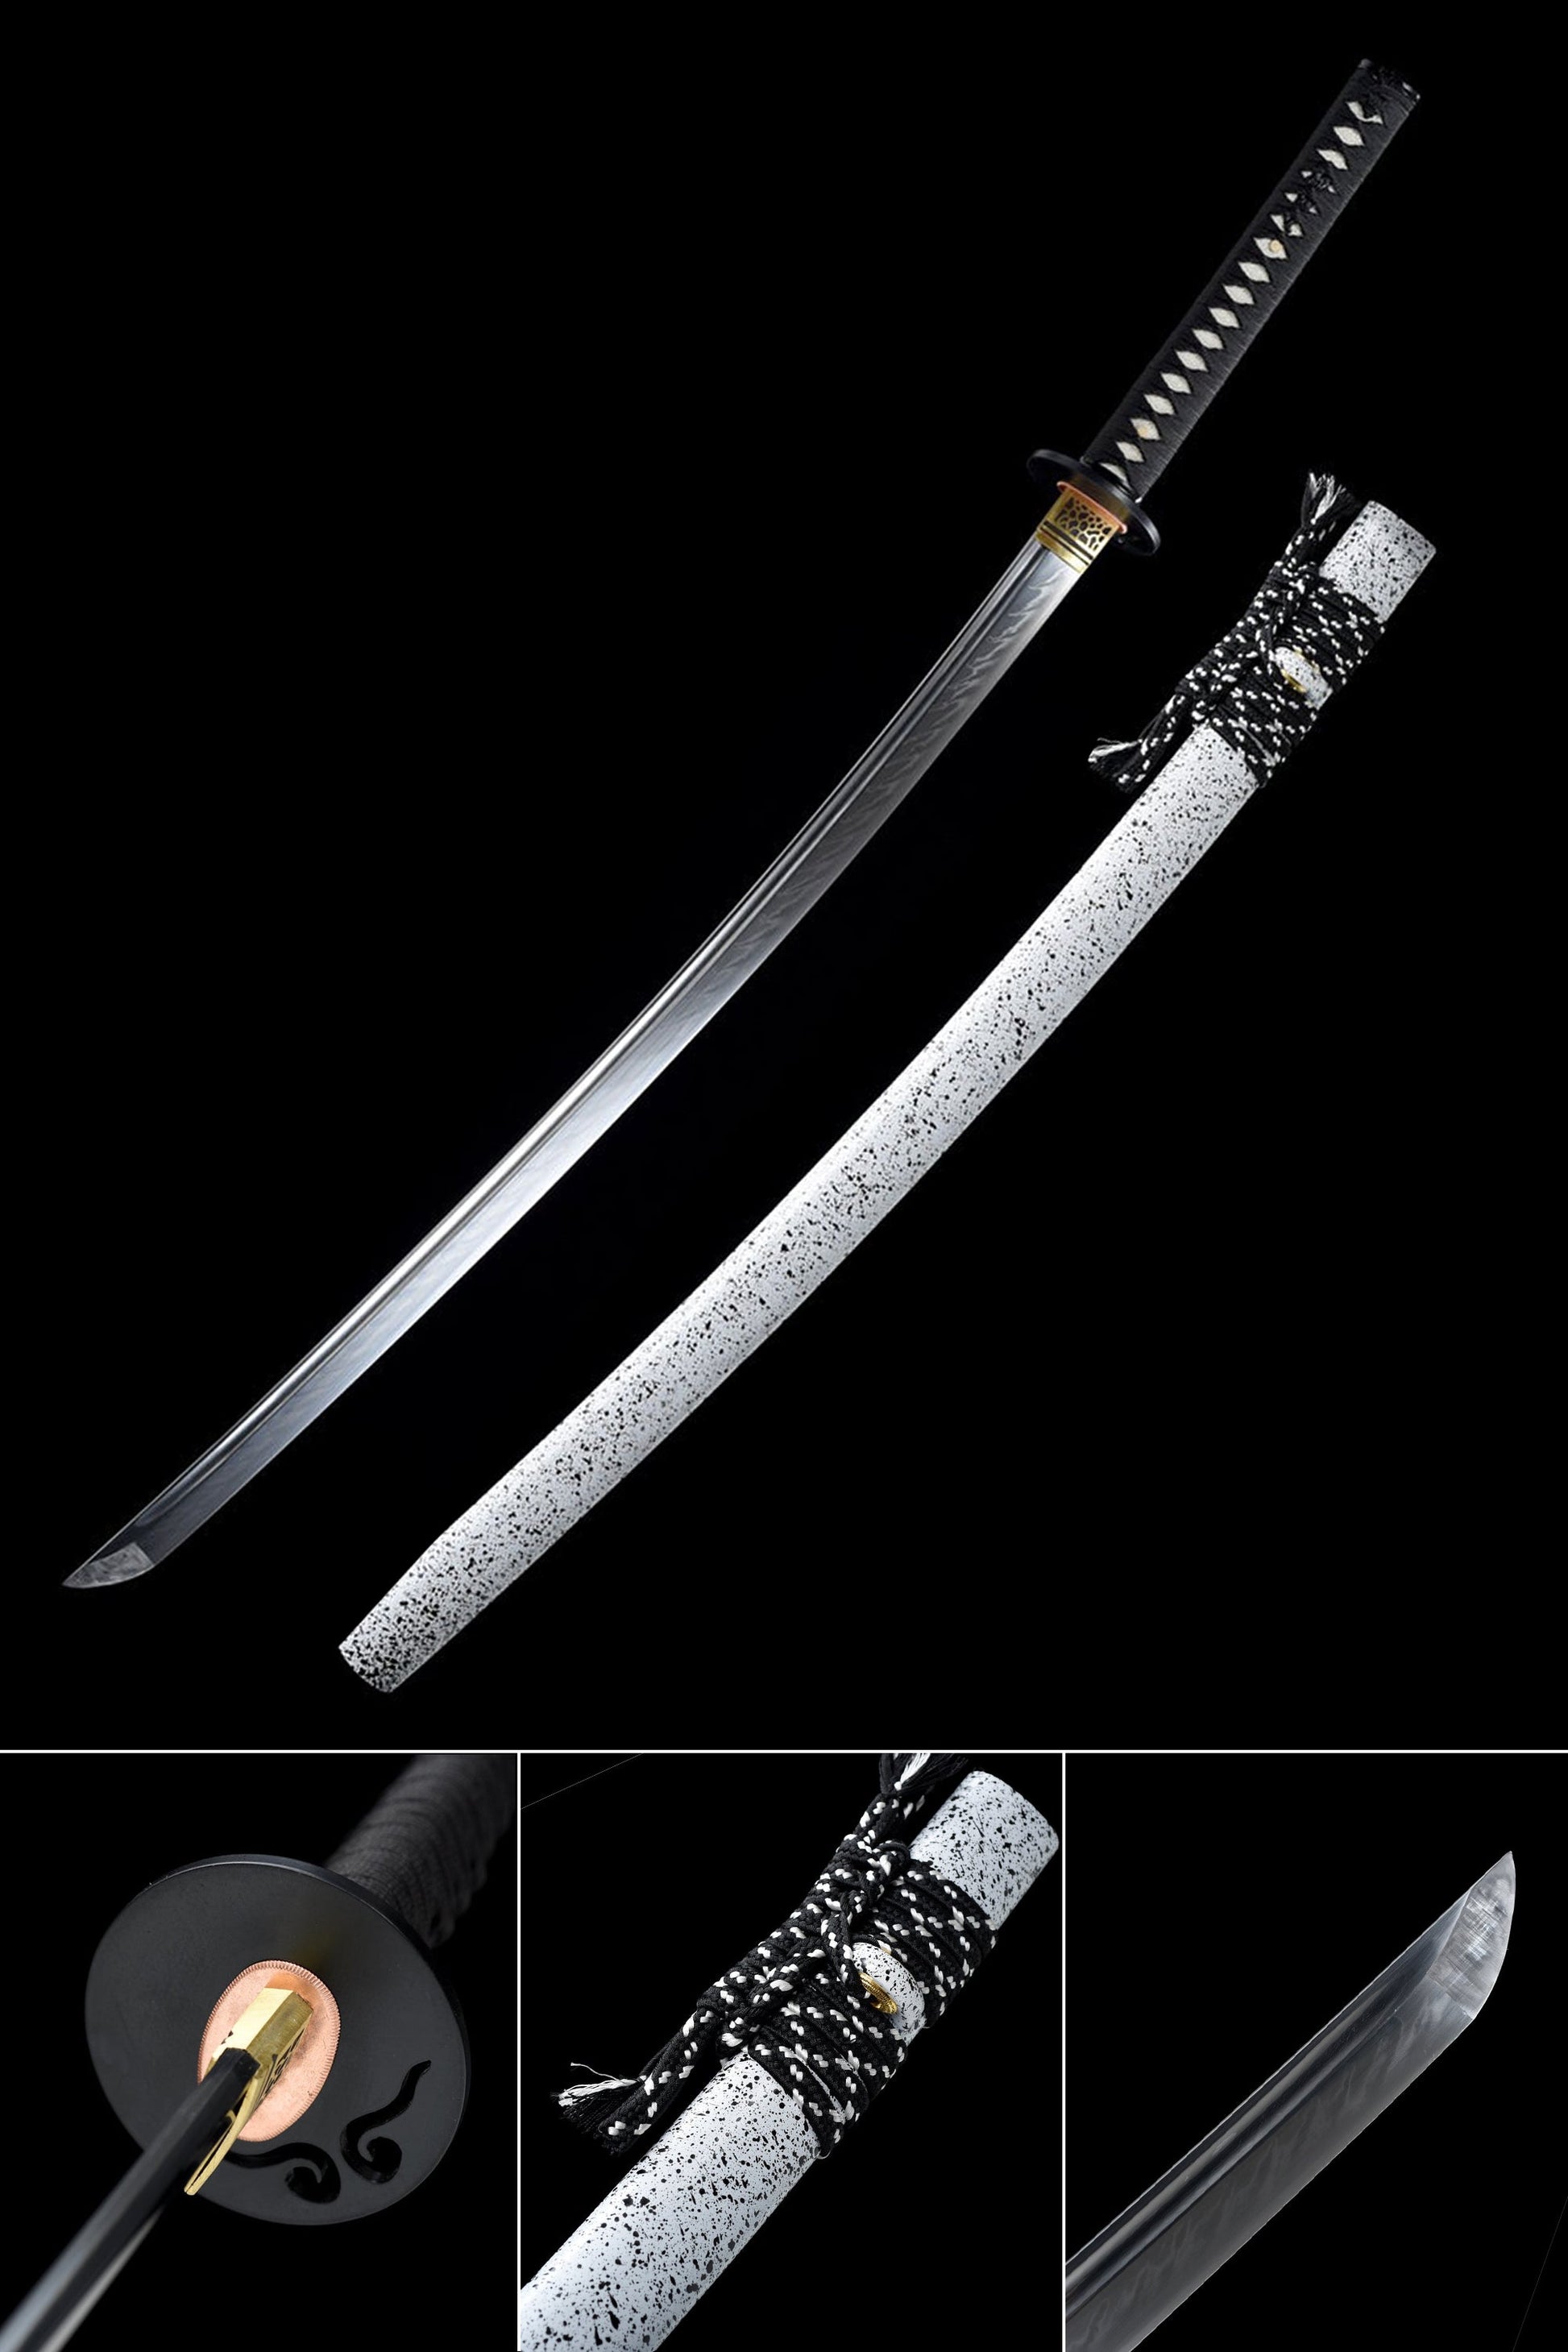 Hand Forged Katana,Lightning Engraving Blue Branches Classic – Swordsuk -  Handmade Japanese Samurai Katana Swords In The UK